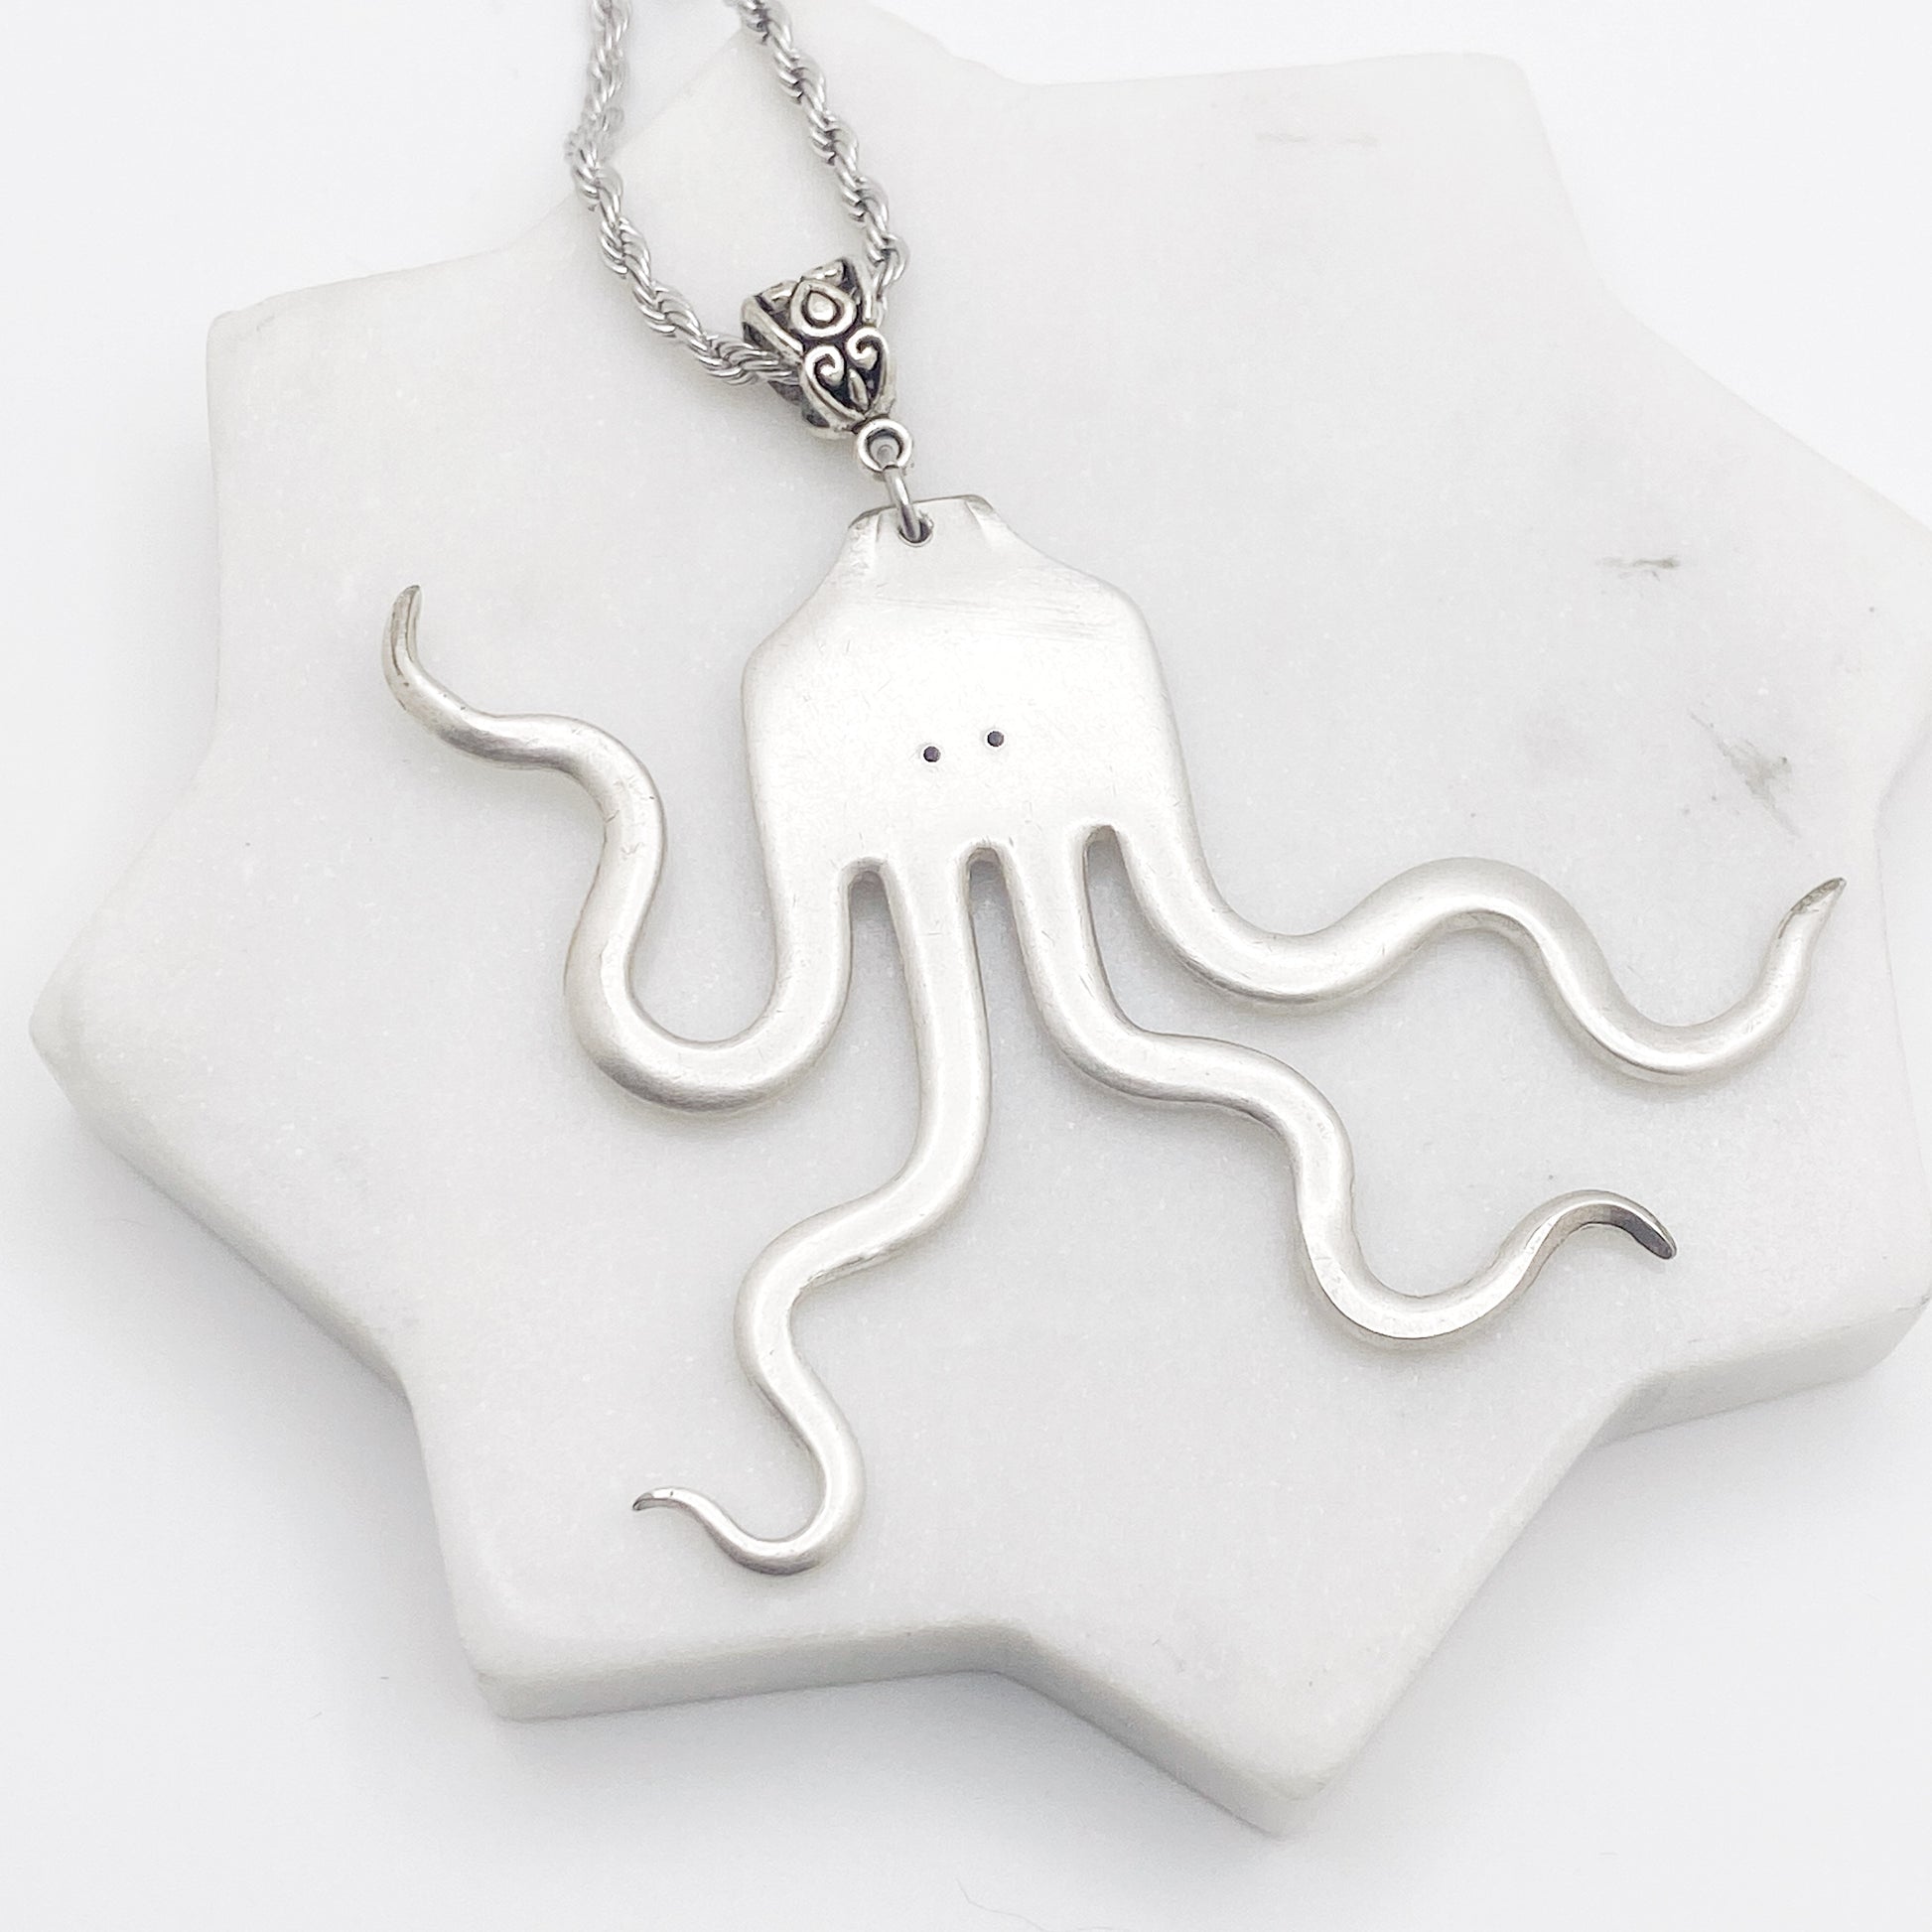 Forktopus Necklace, Octopus Fork Pendant, Vintage Silverware Jewelry Necklaces callistafaye   